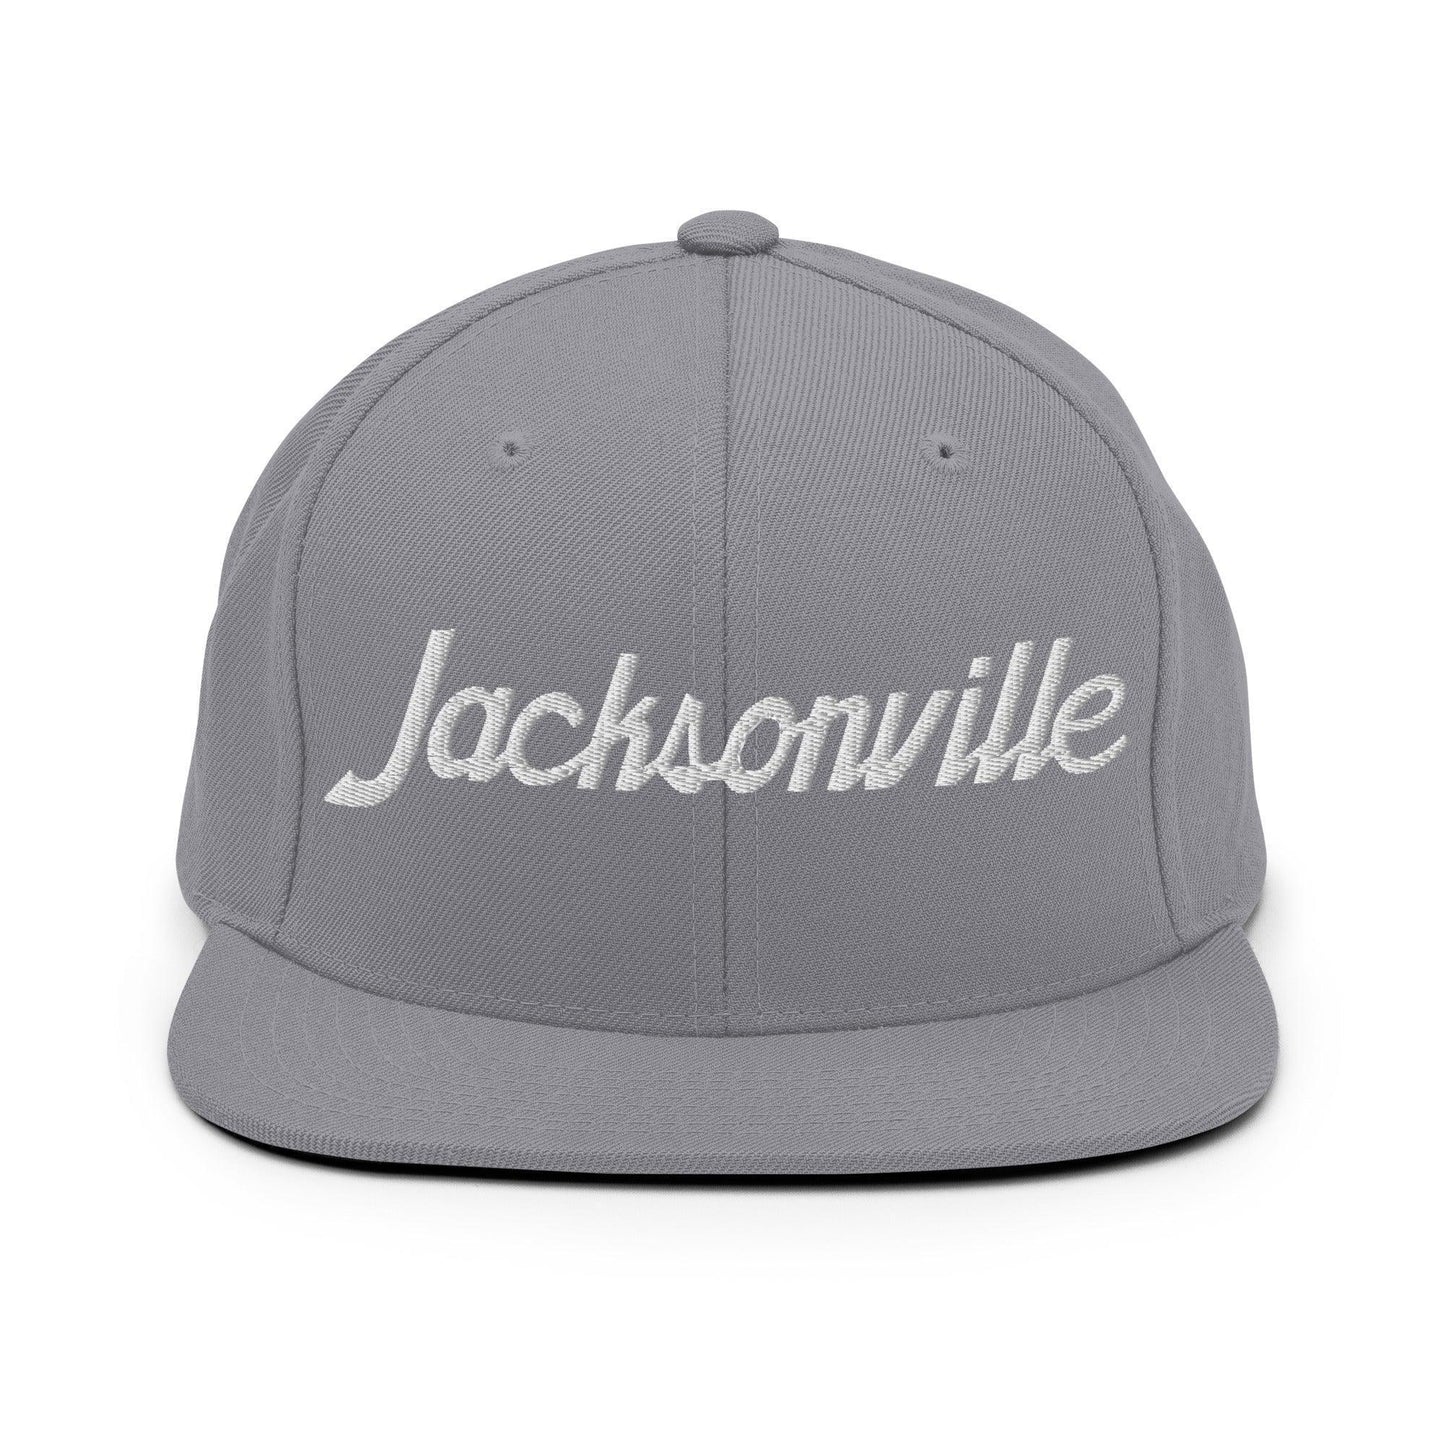 Jacksonville Script Snapback Hat Silver